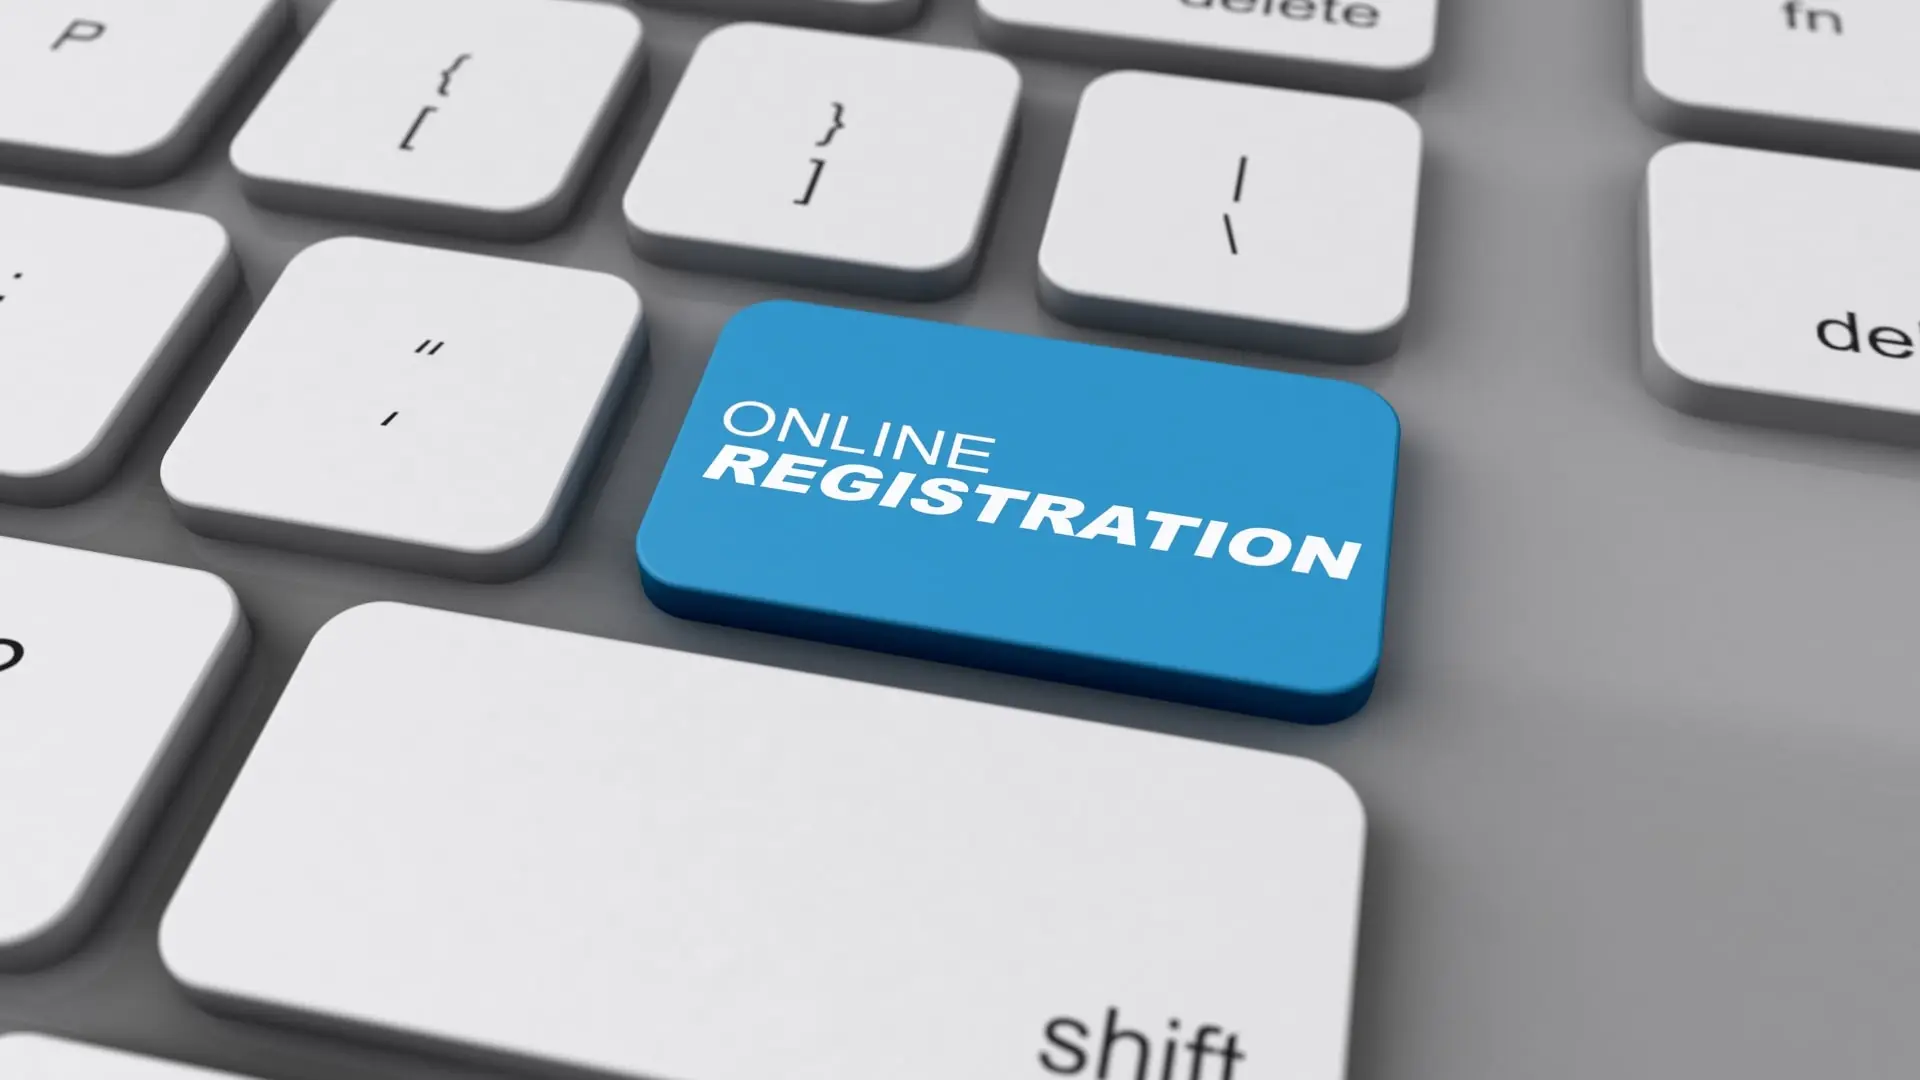 Online VAT Registration Button on Keyboard